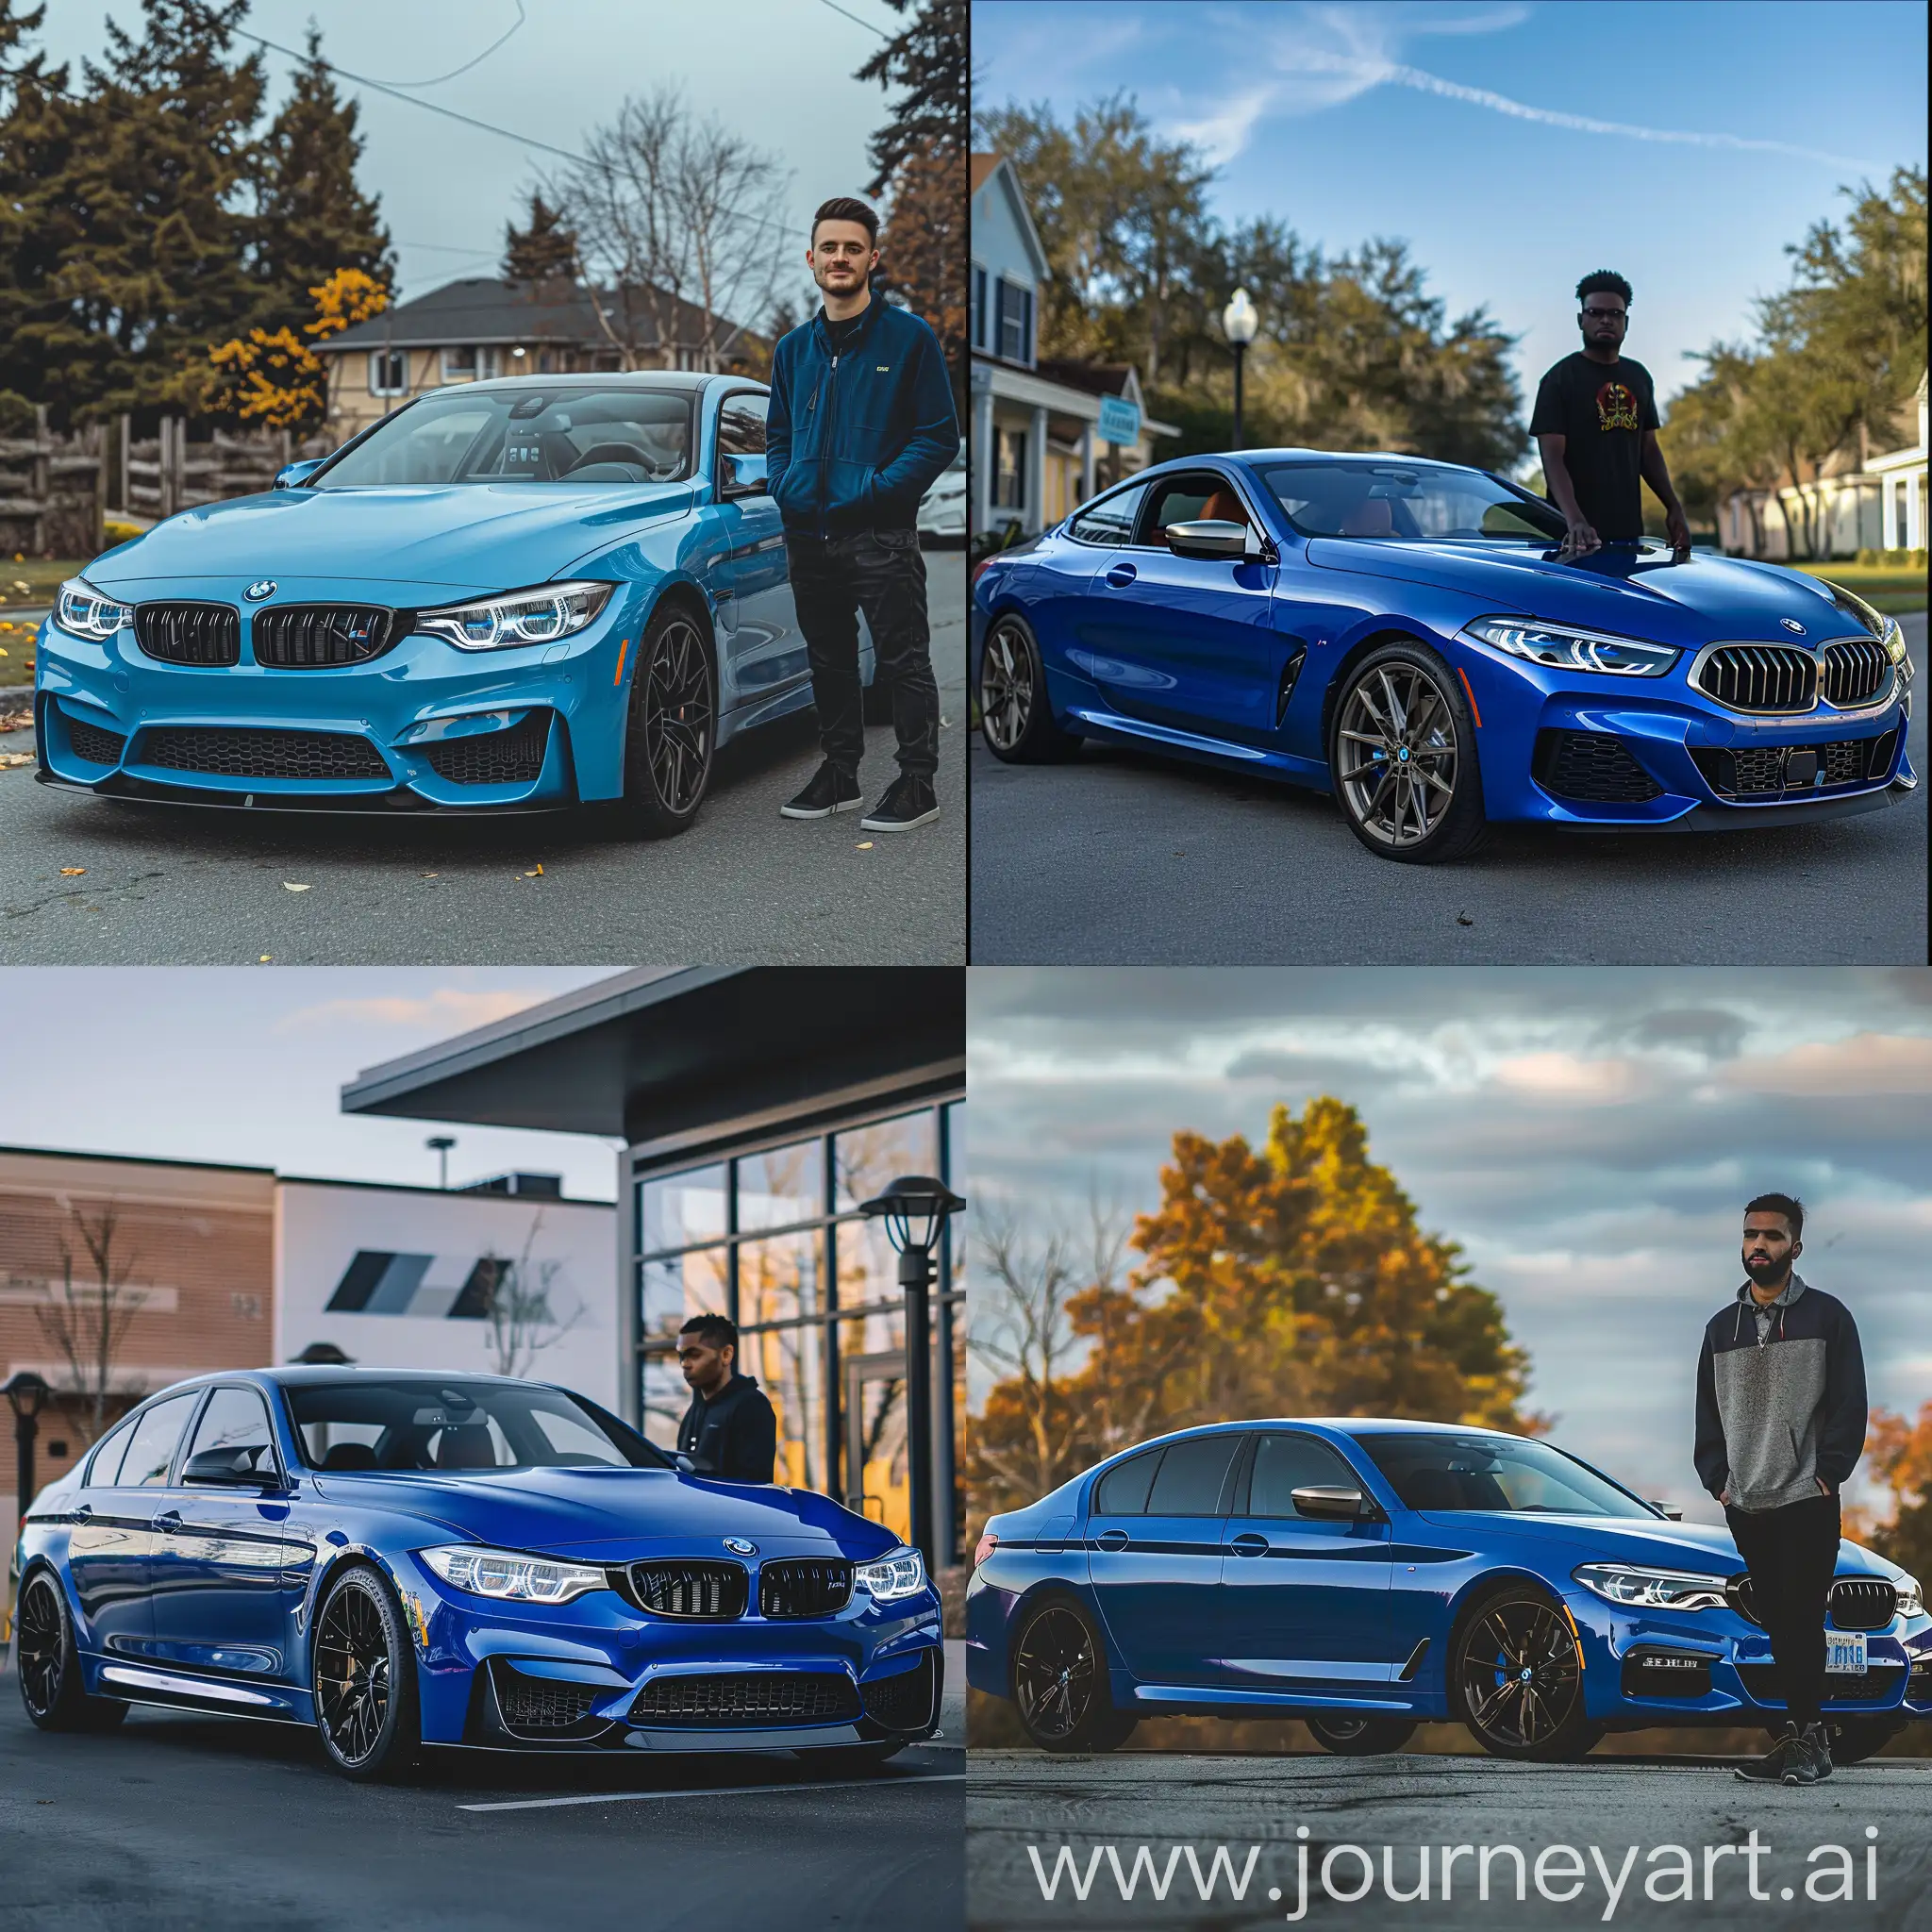 Man-Standing-Beside-Blue-BMW-Sports-Car